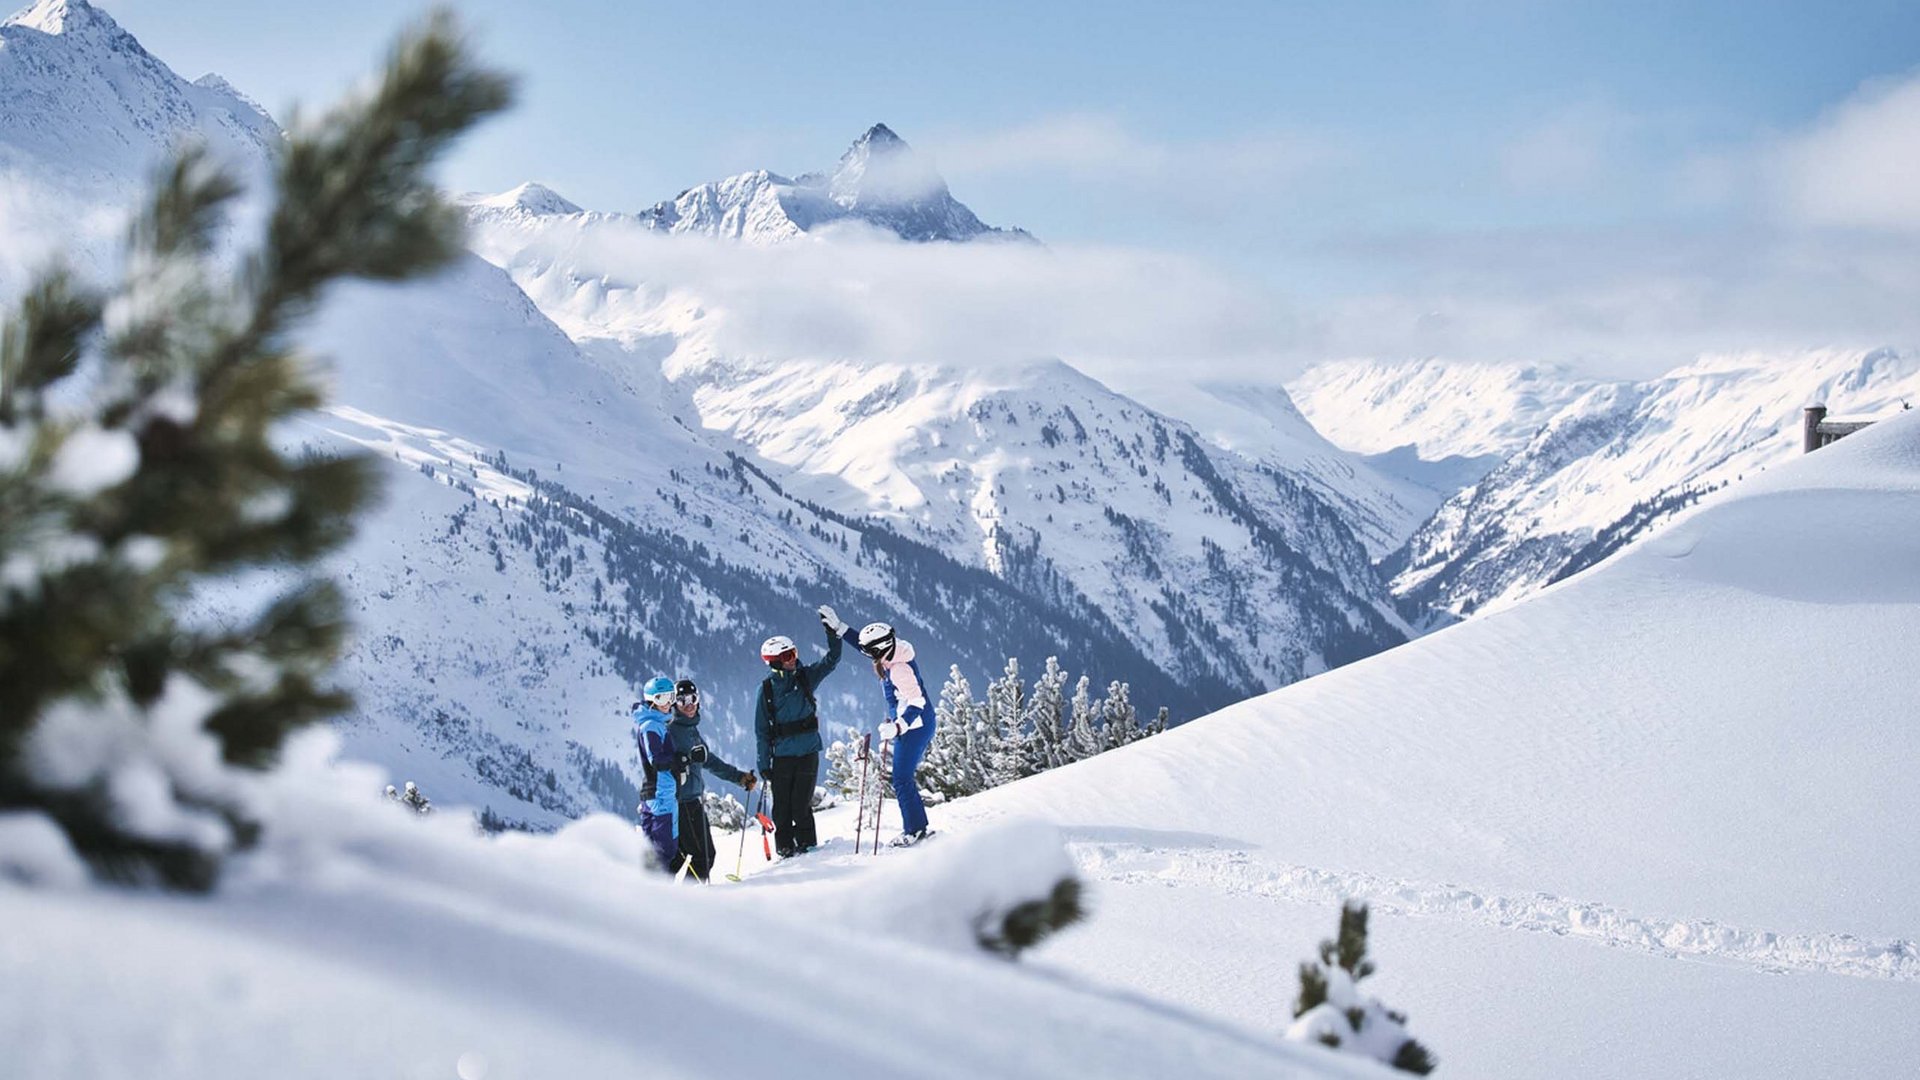 St. Anton am Arlberg in winter – stunning Alpine scenery